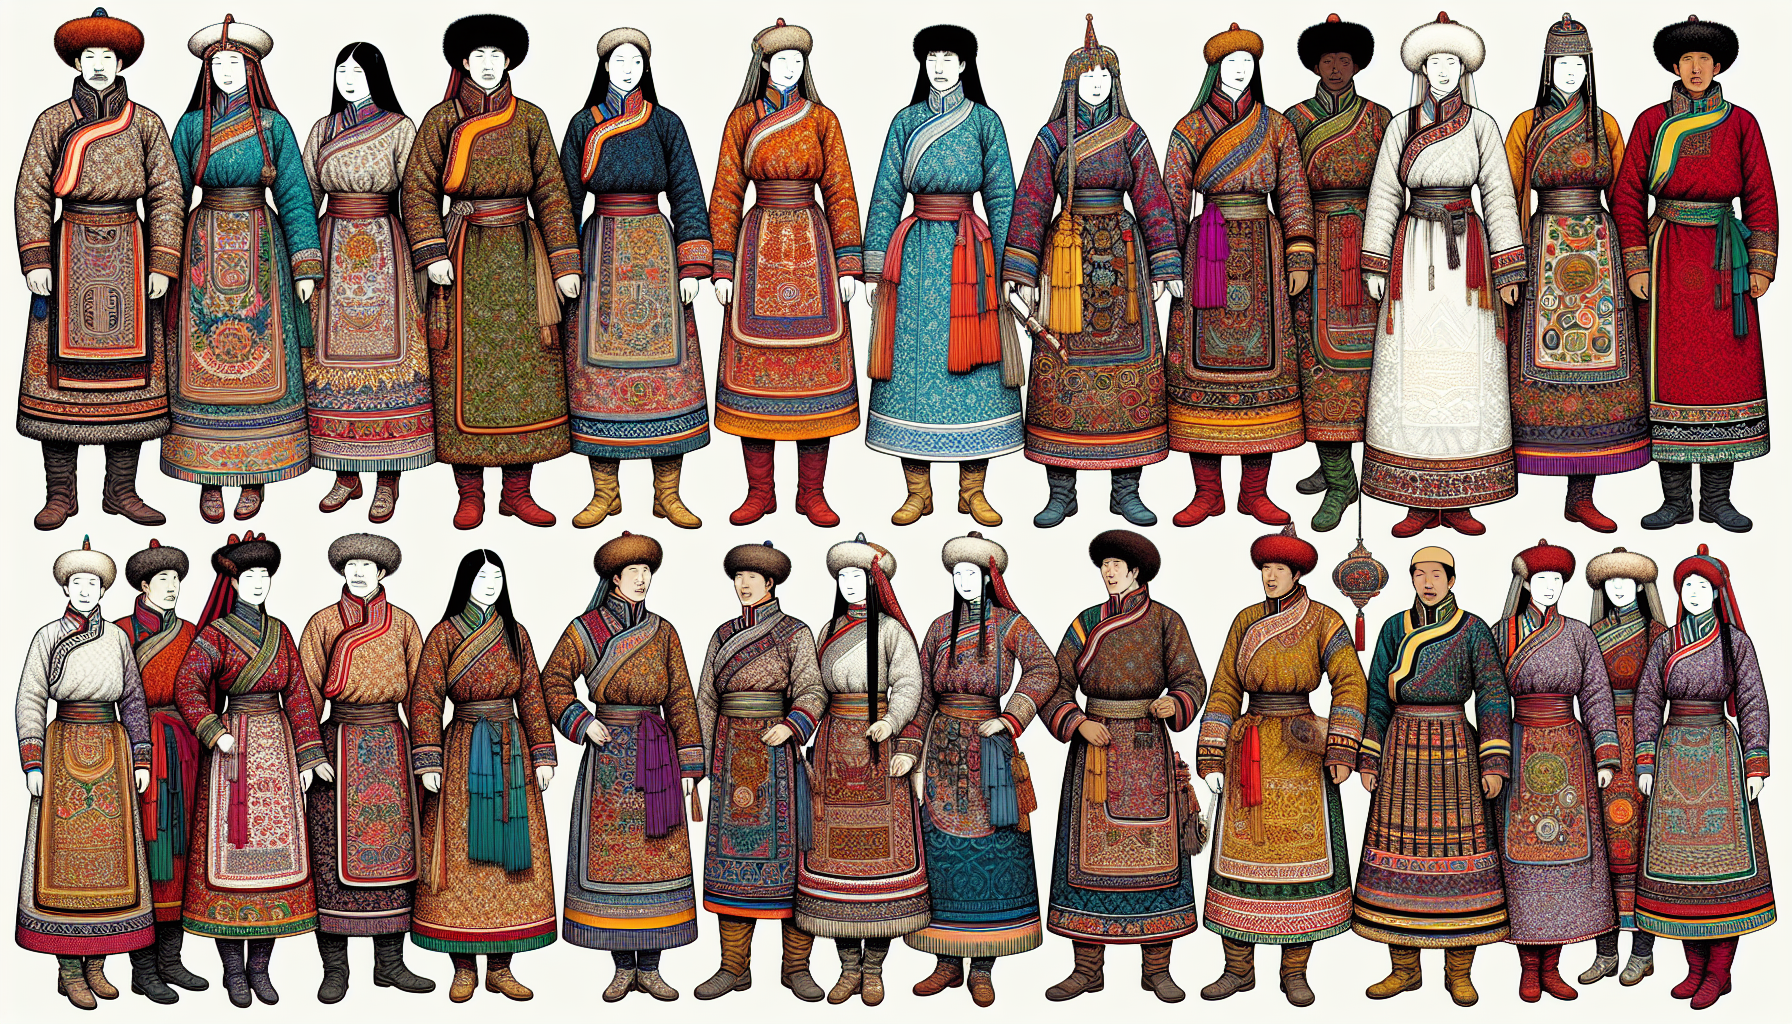 Illustration of Mongolian people wearing traditional deels